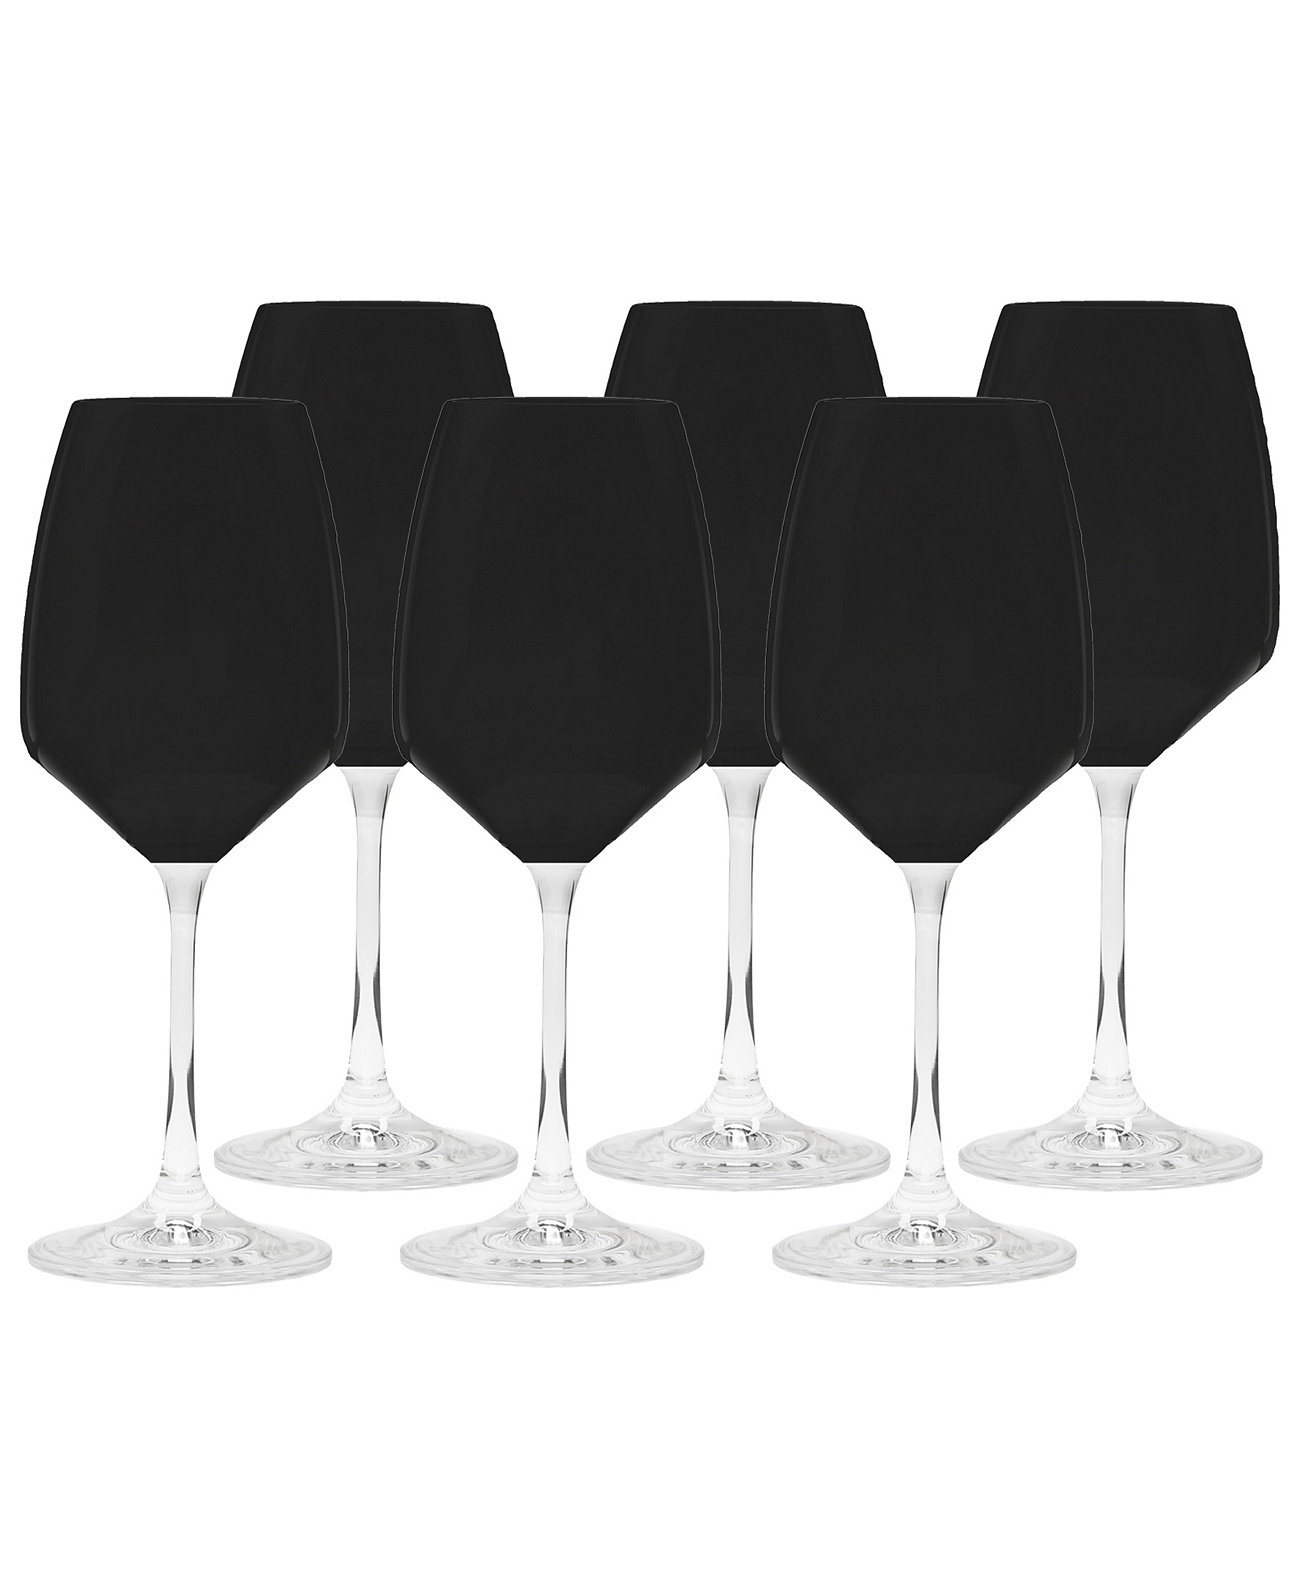 Черные стаканы для воды на ножке, набор из 6 шт. Classic Touch